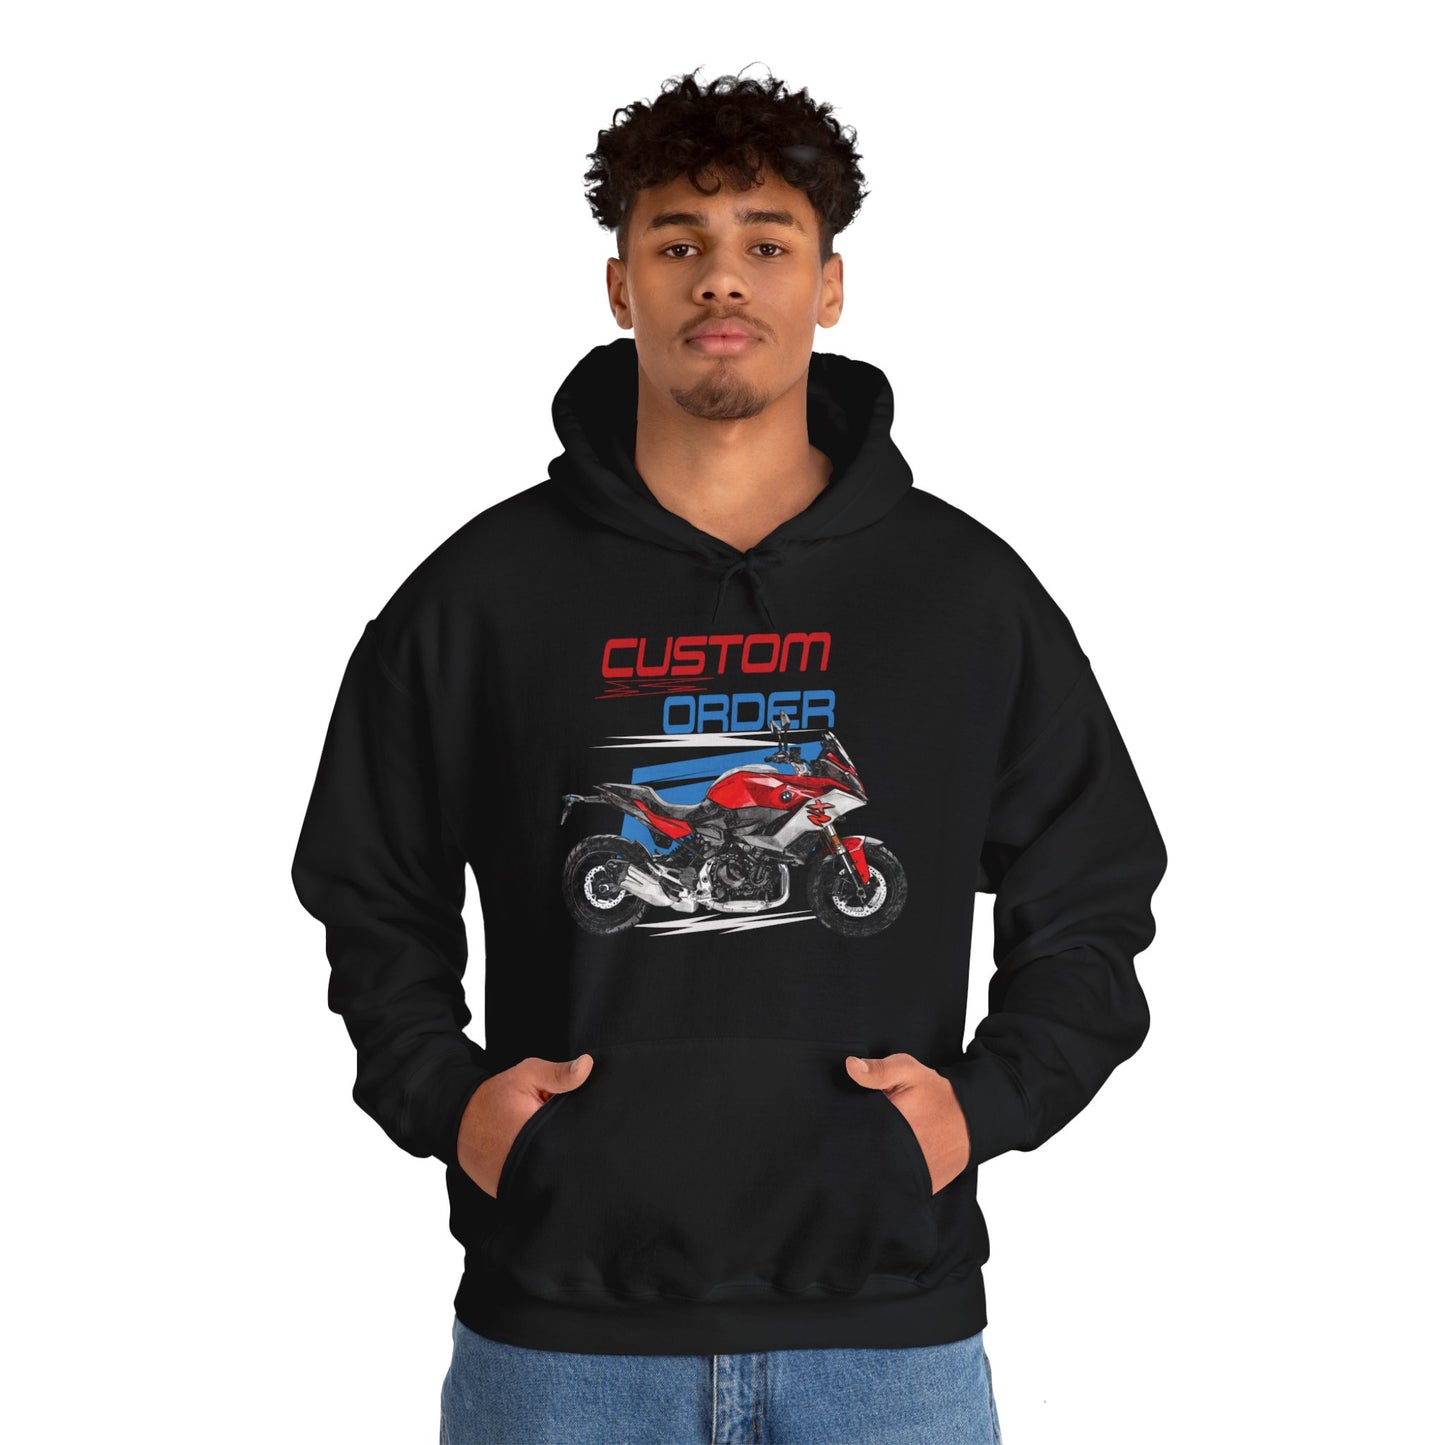 Draw My Motorcycle - Hoodie | Personalized Sweatshirt | Motorcycle Tee - Gift for Riders